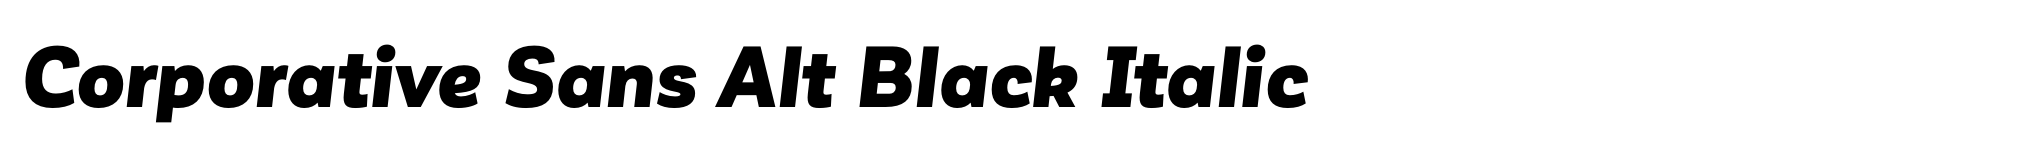 Corporative Sans Alt Black Italic image